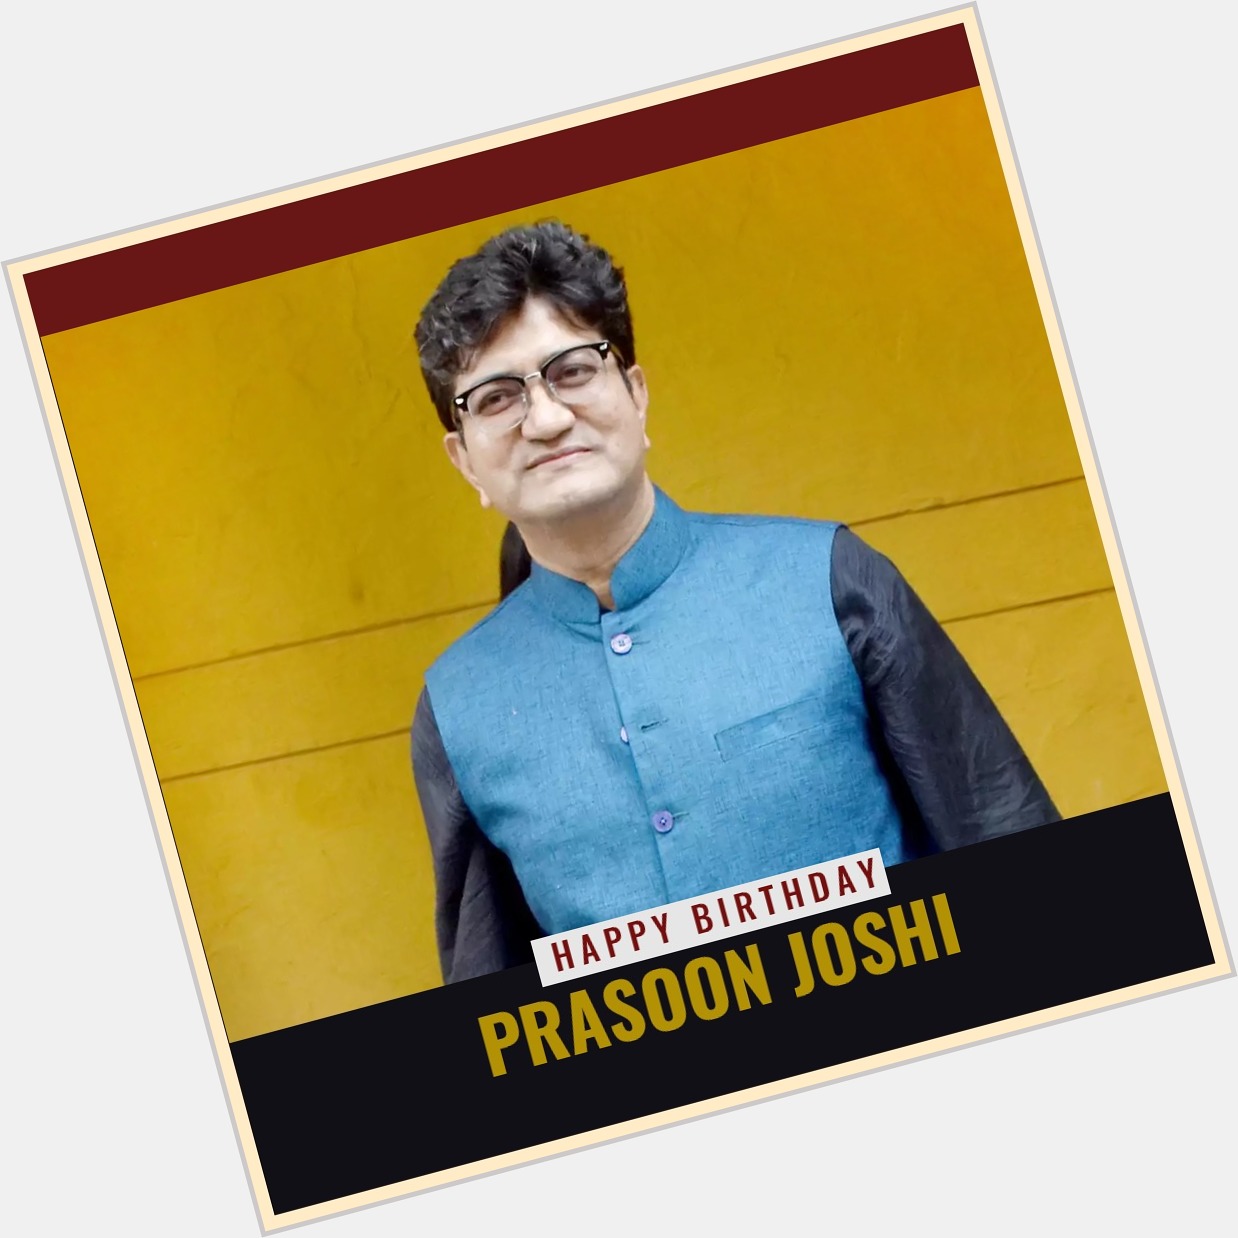 Happy Birthday to prasoon Joshi. Have a amazing year with more success
HappyBirthday PrasoonJoshi 